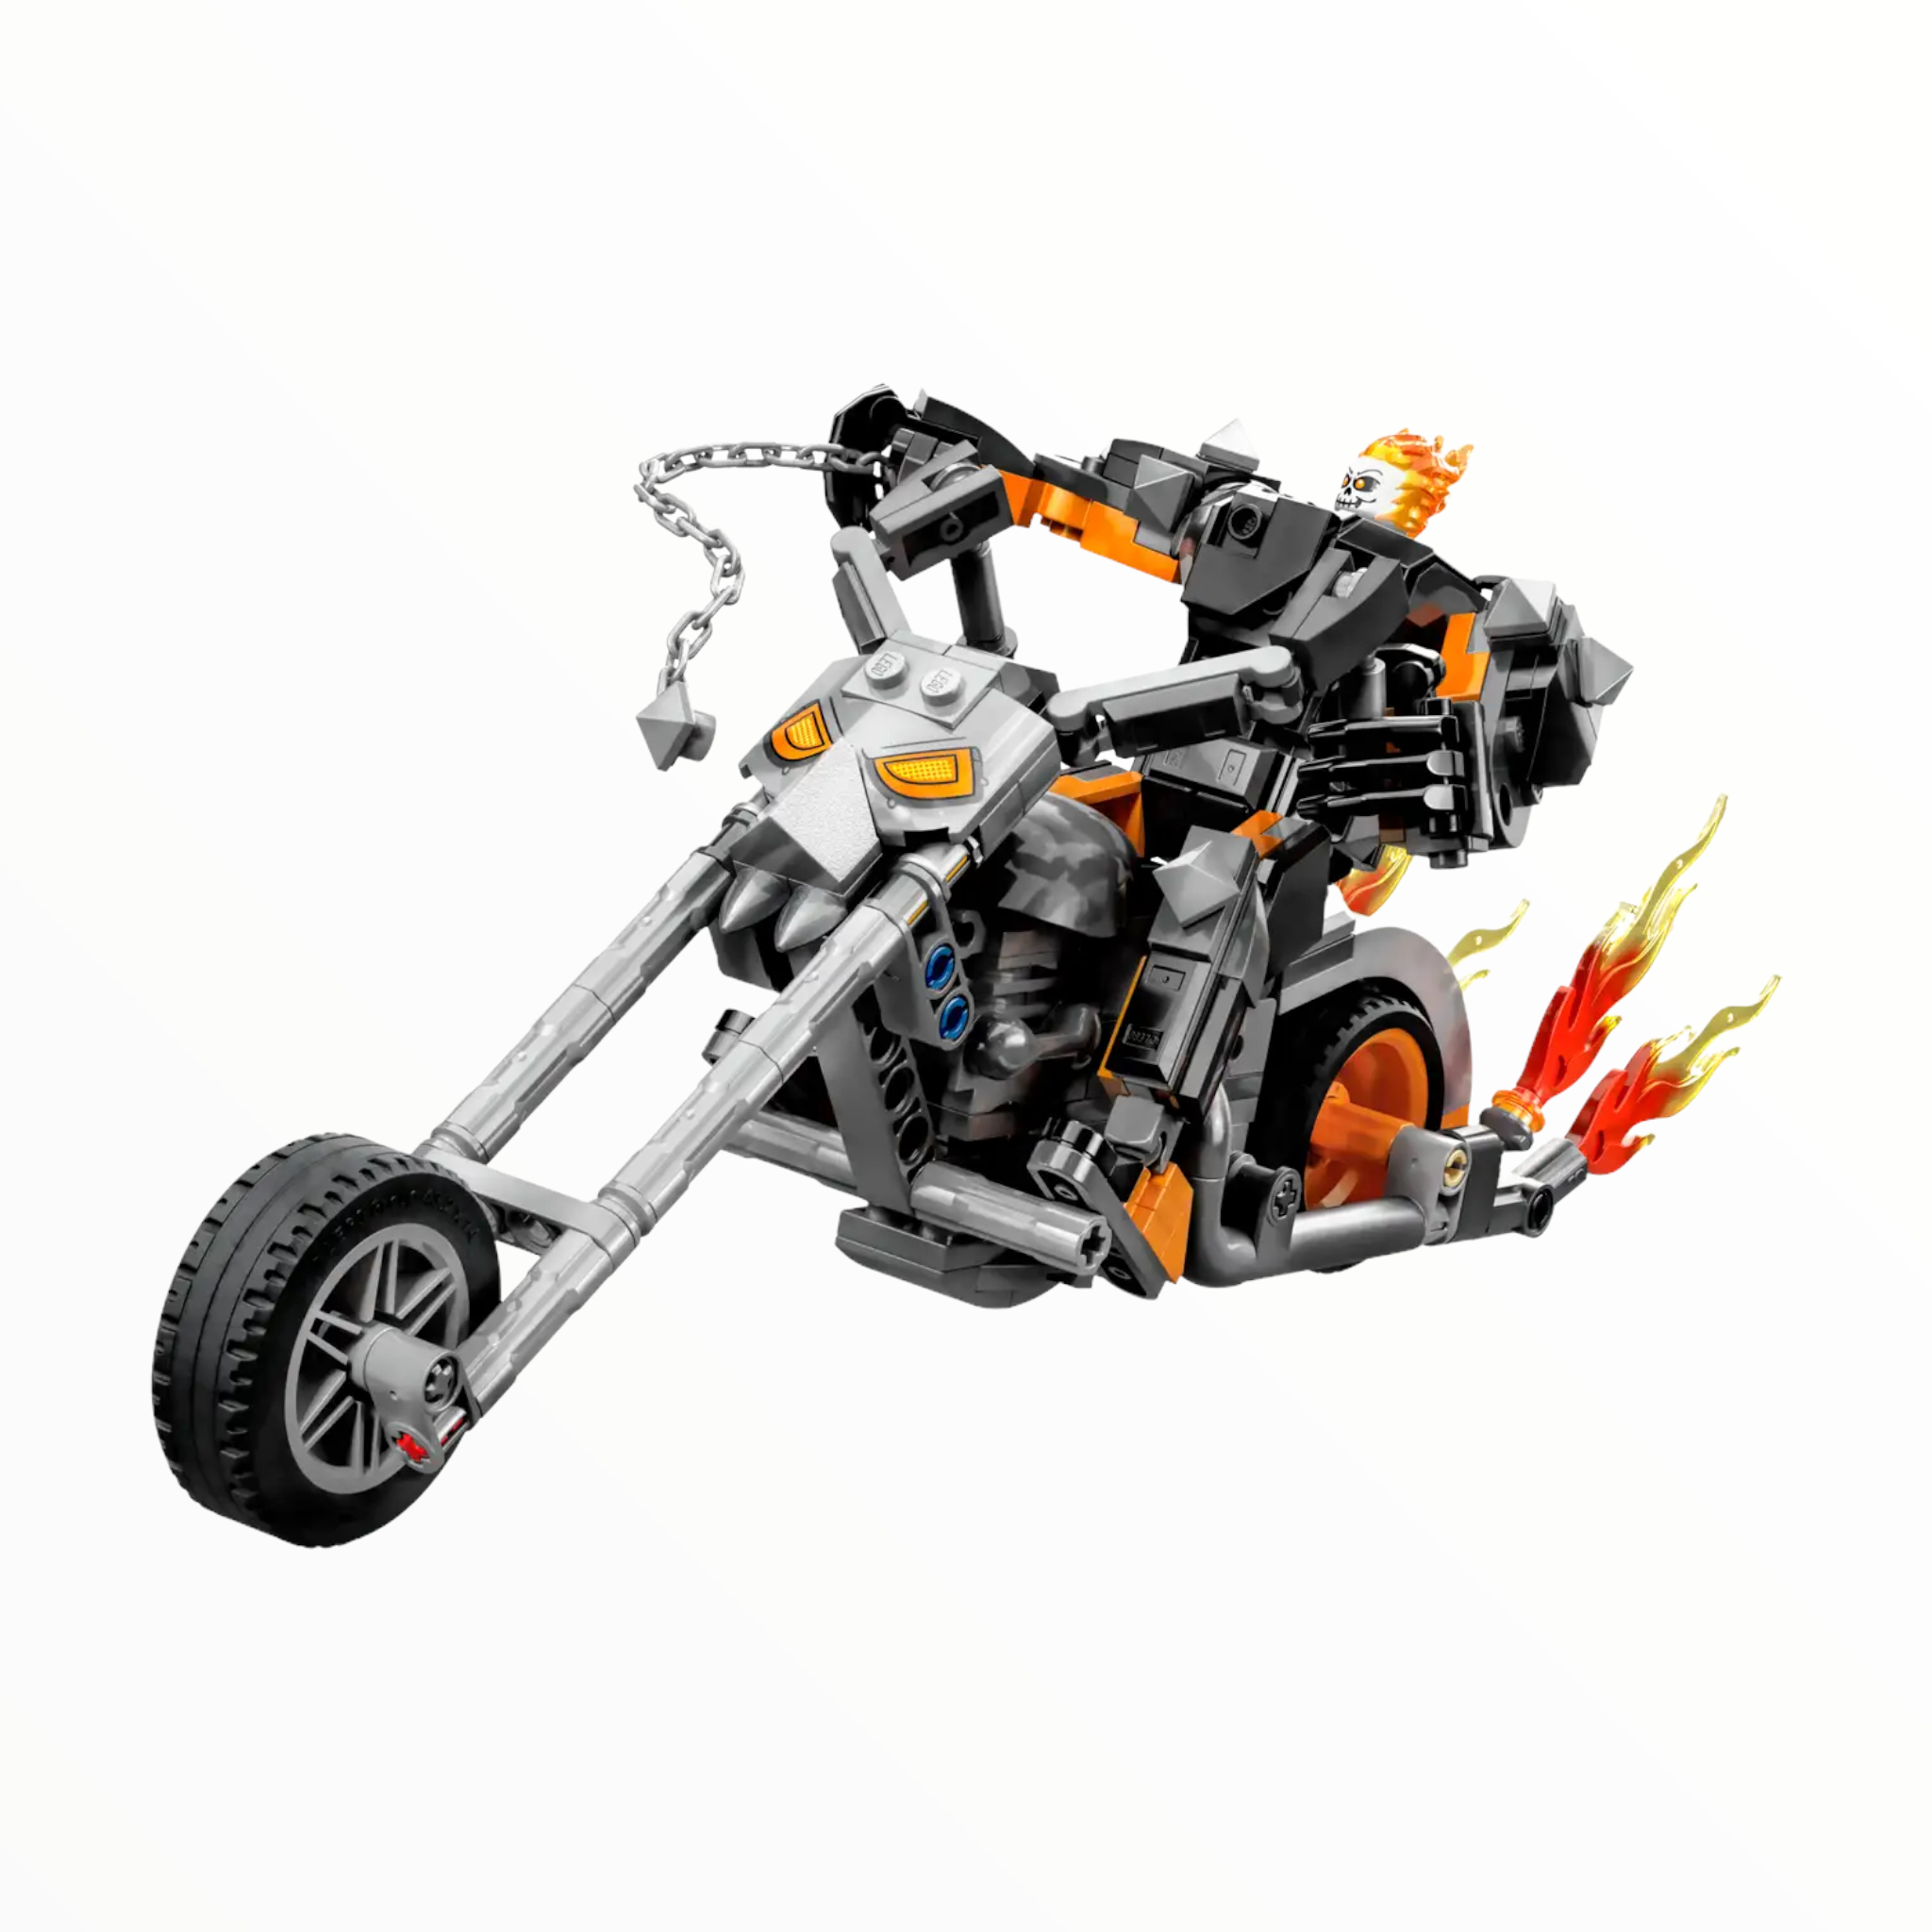 76245 Marvel Ghost Rider Mech & Bike